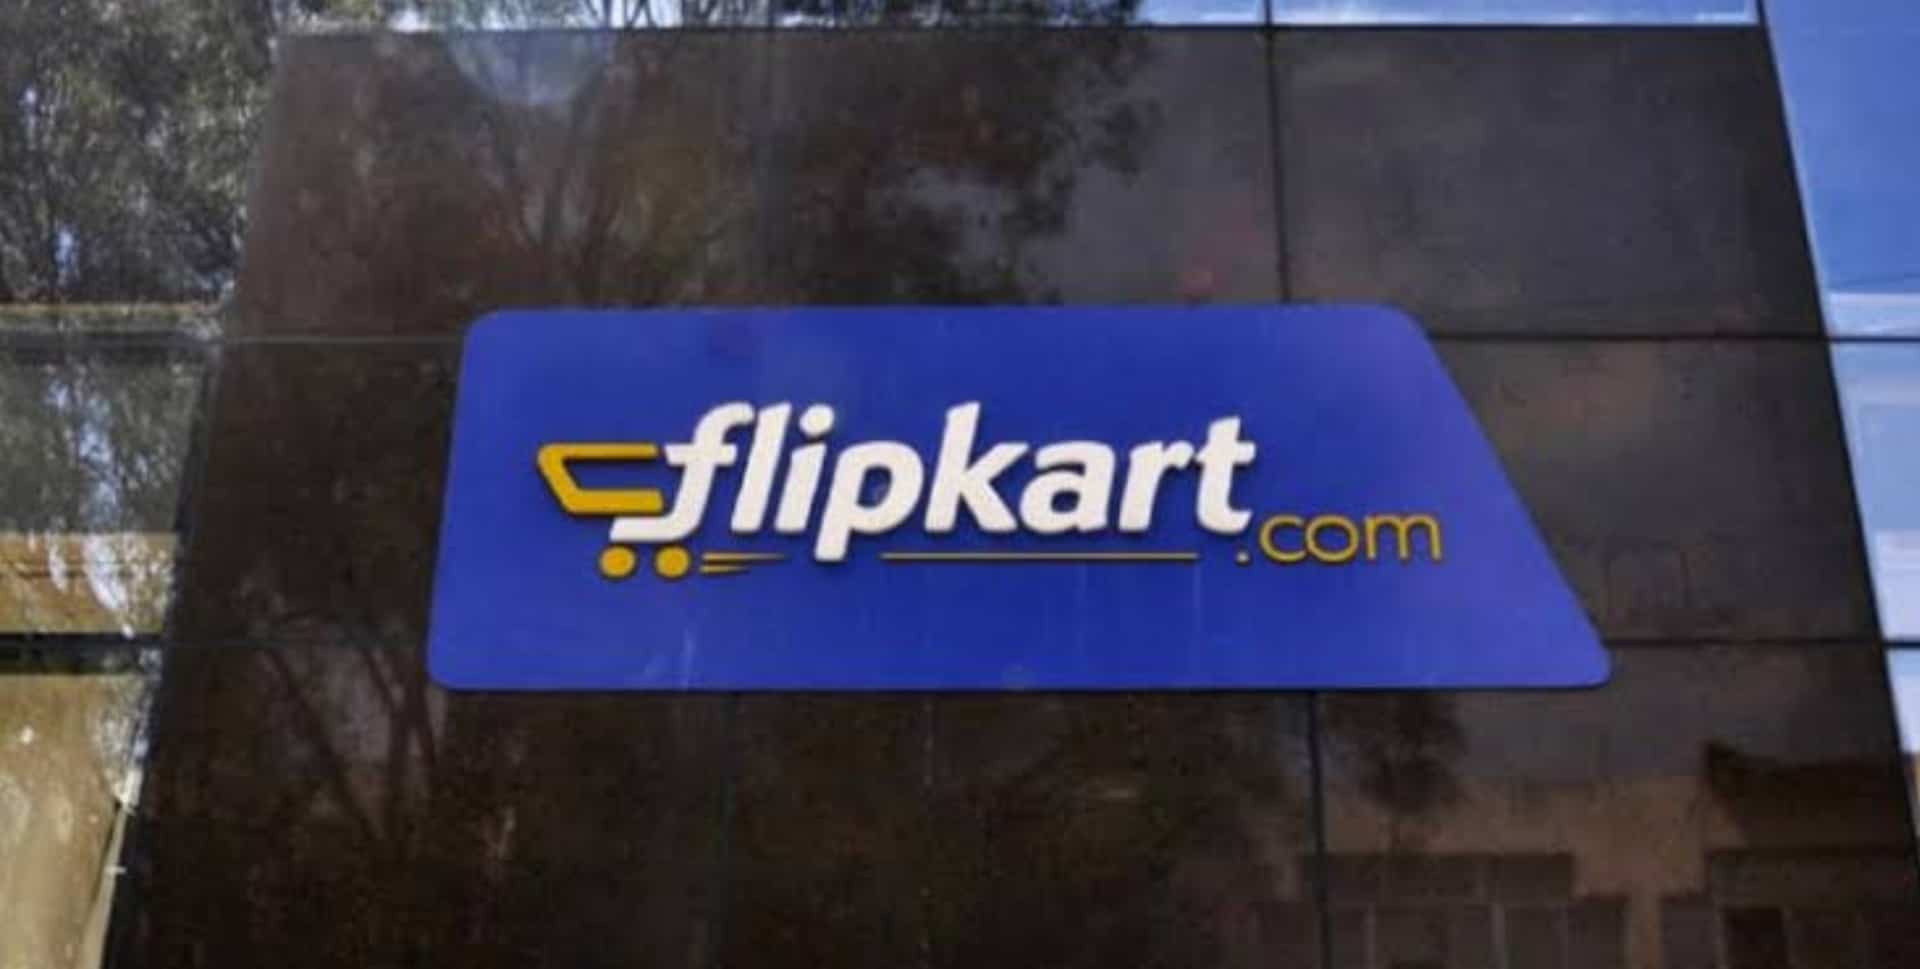 Flipkart Announces ‘Launchpad’ Internship Program for Students in Supply Chain Ahead of the Festive Season